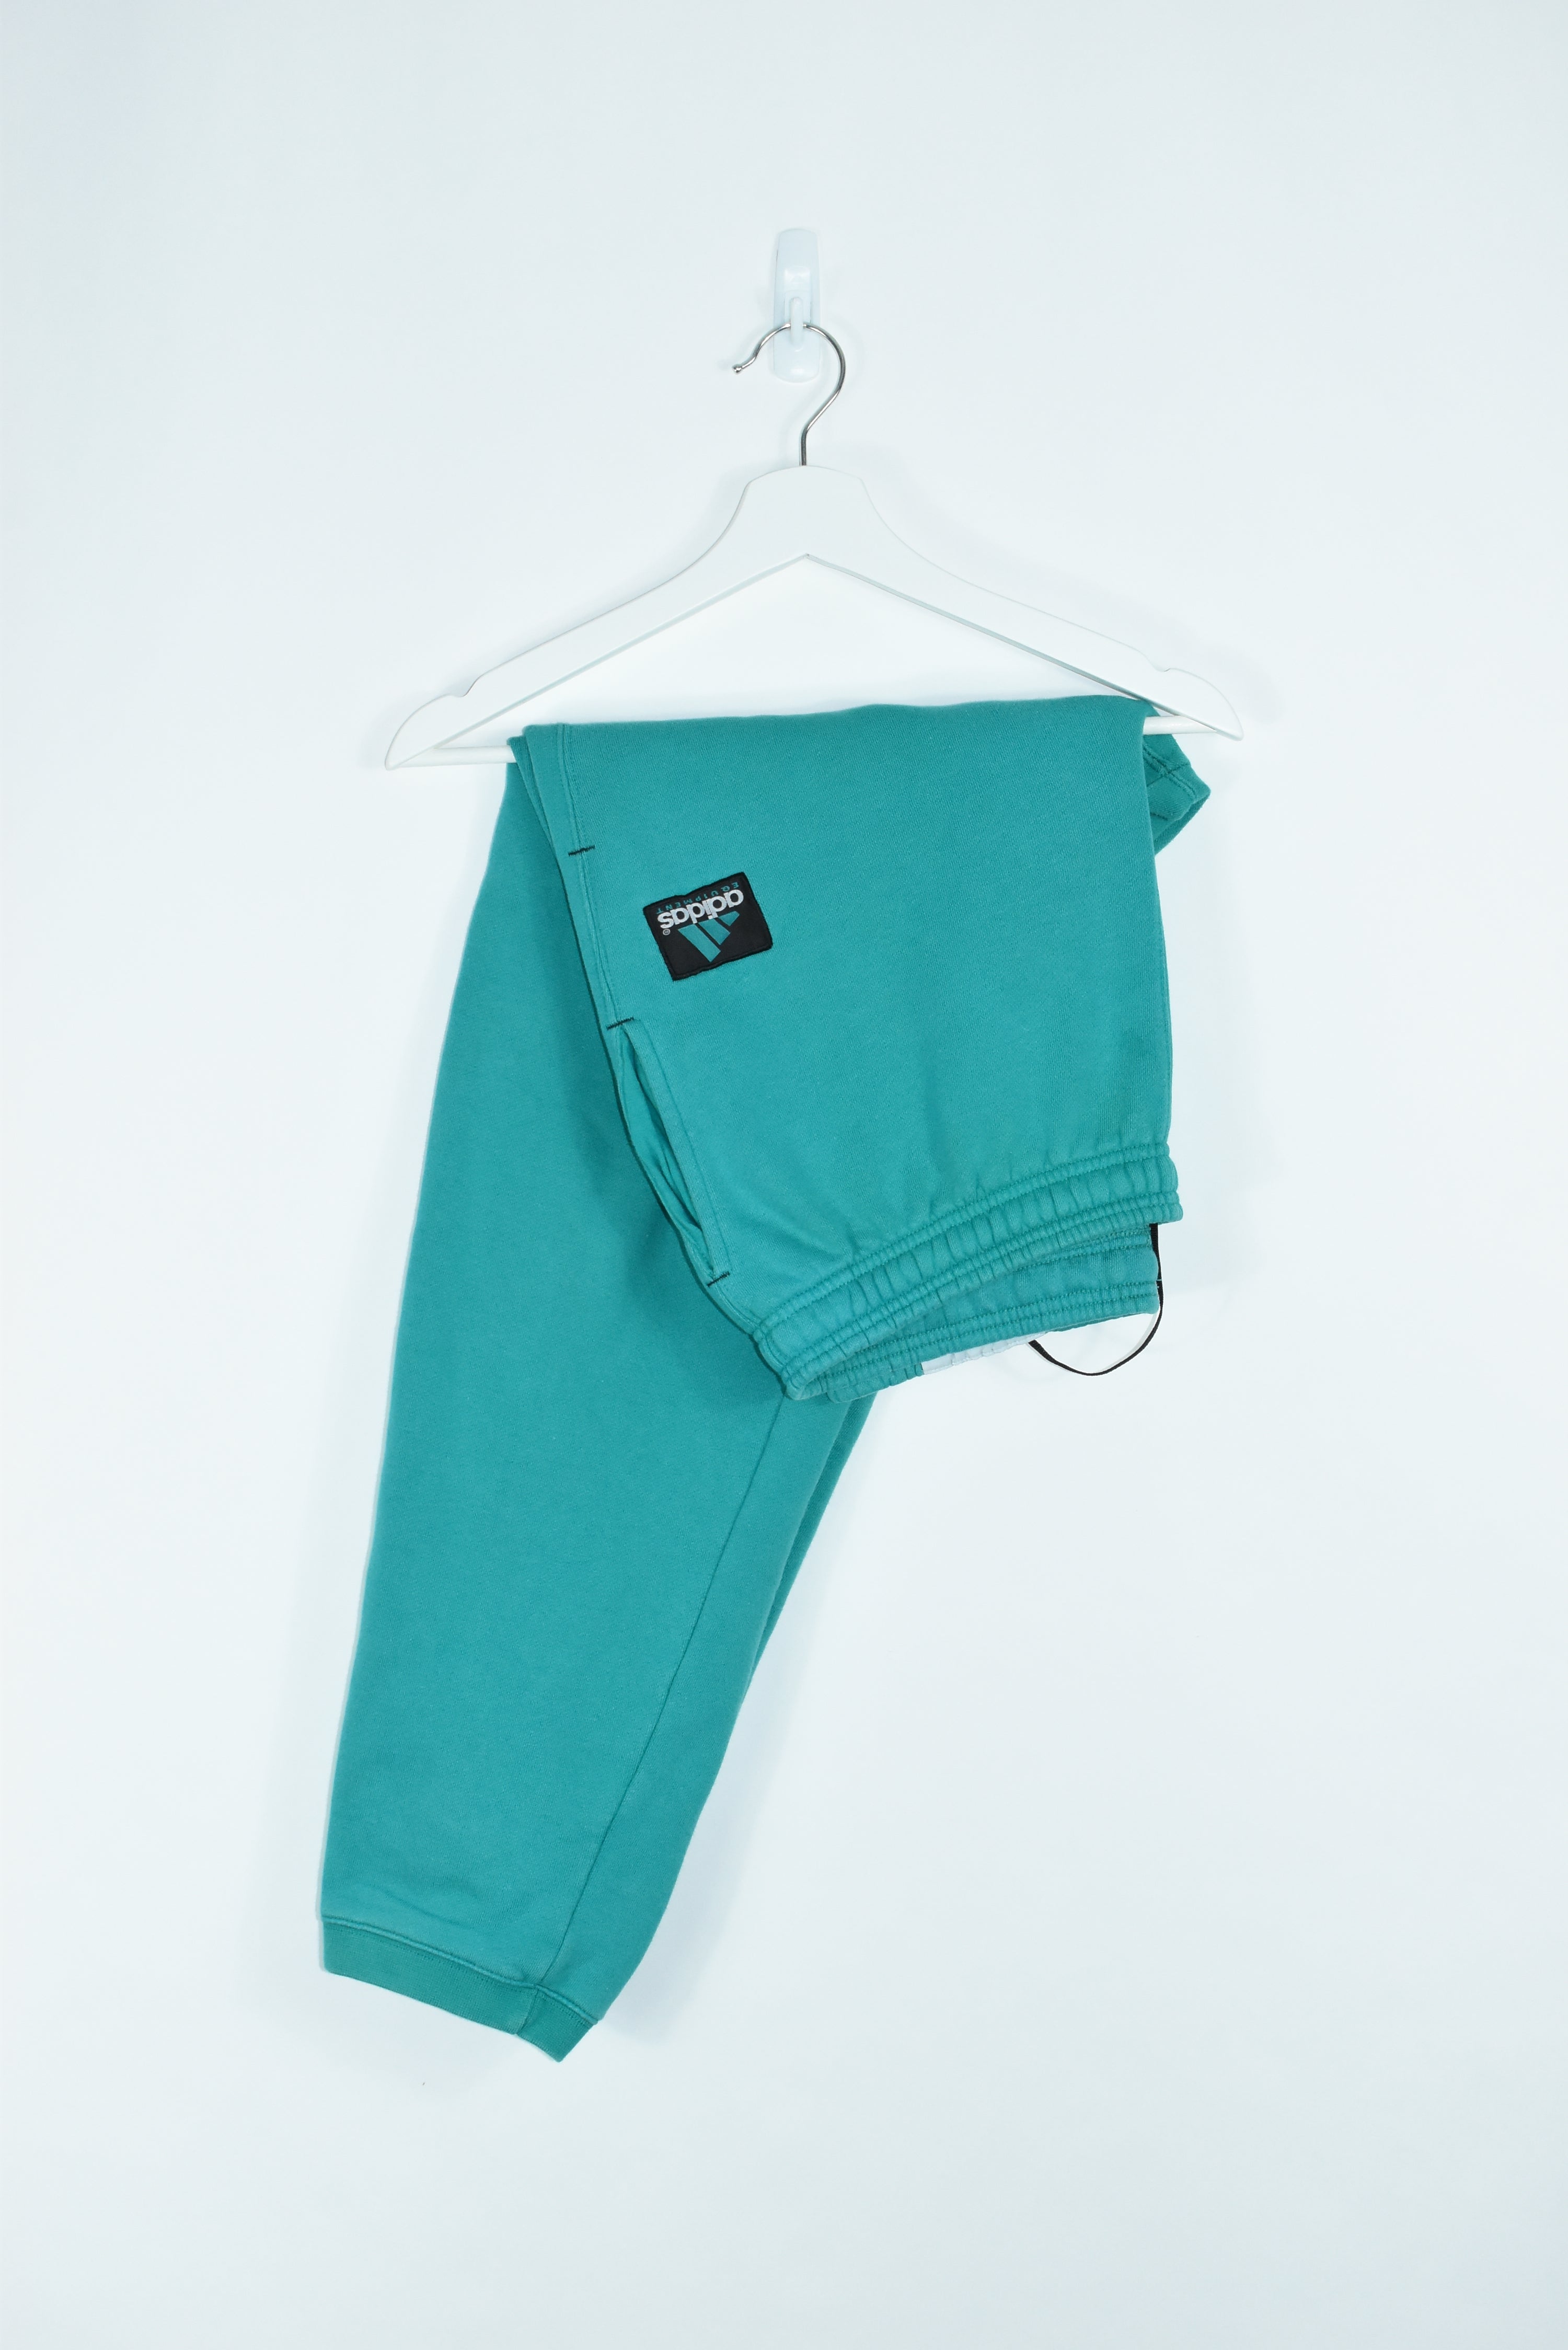 Vintage RARE Adidas Equipment Embroidery Green Sweatshirt/Set XLARGE